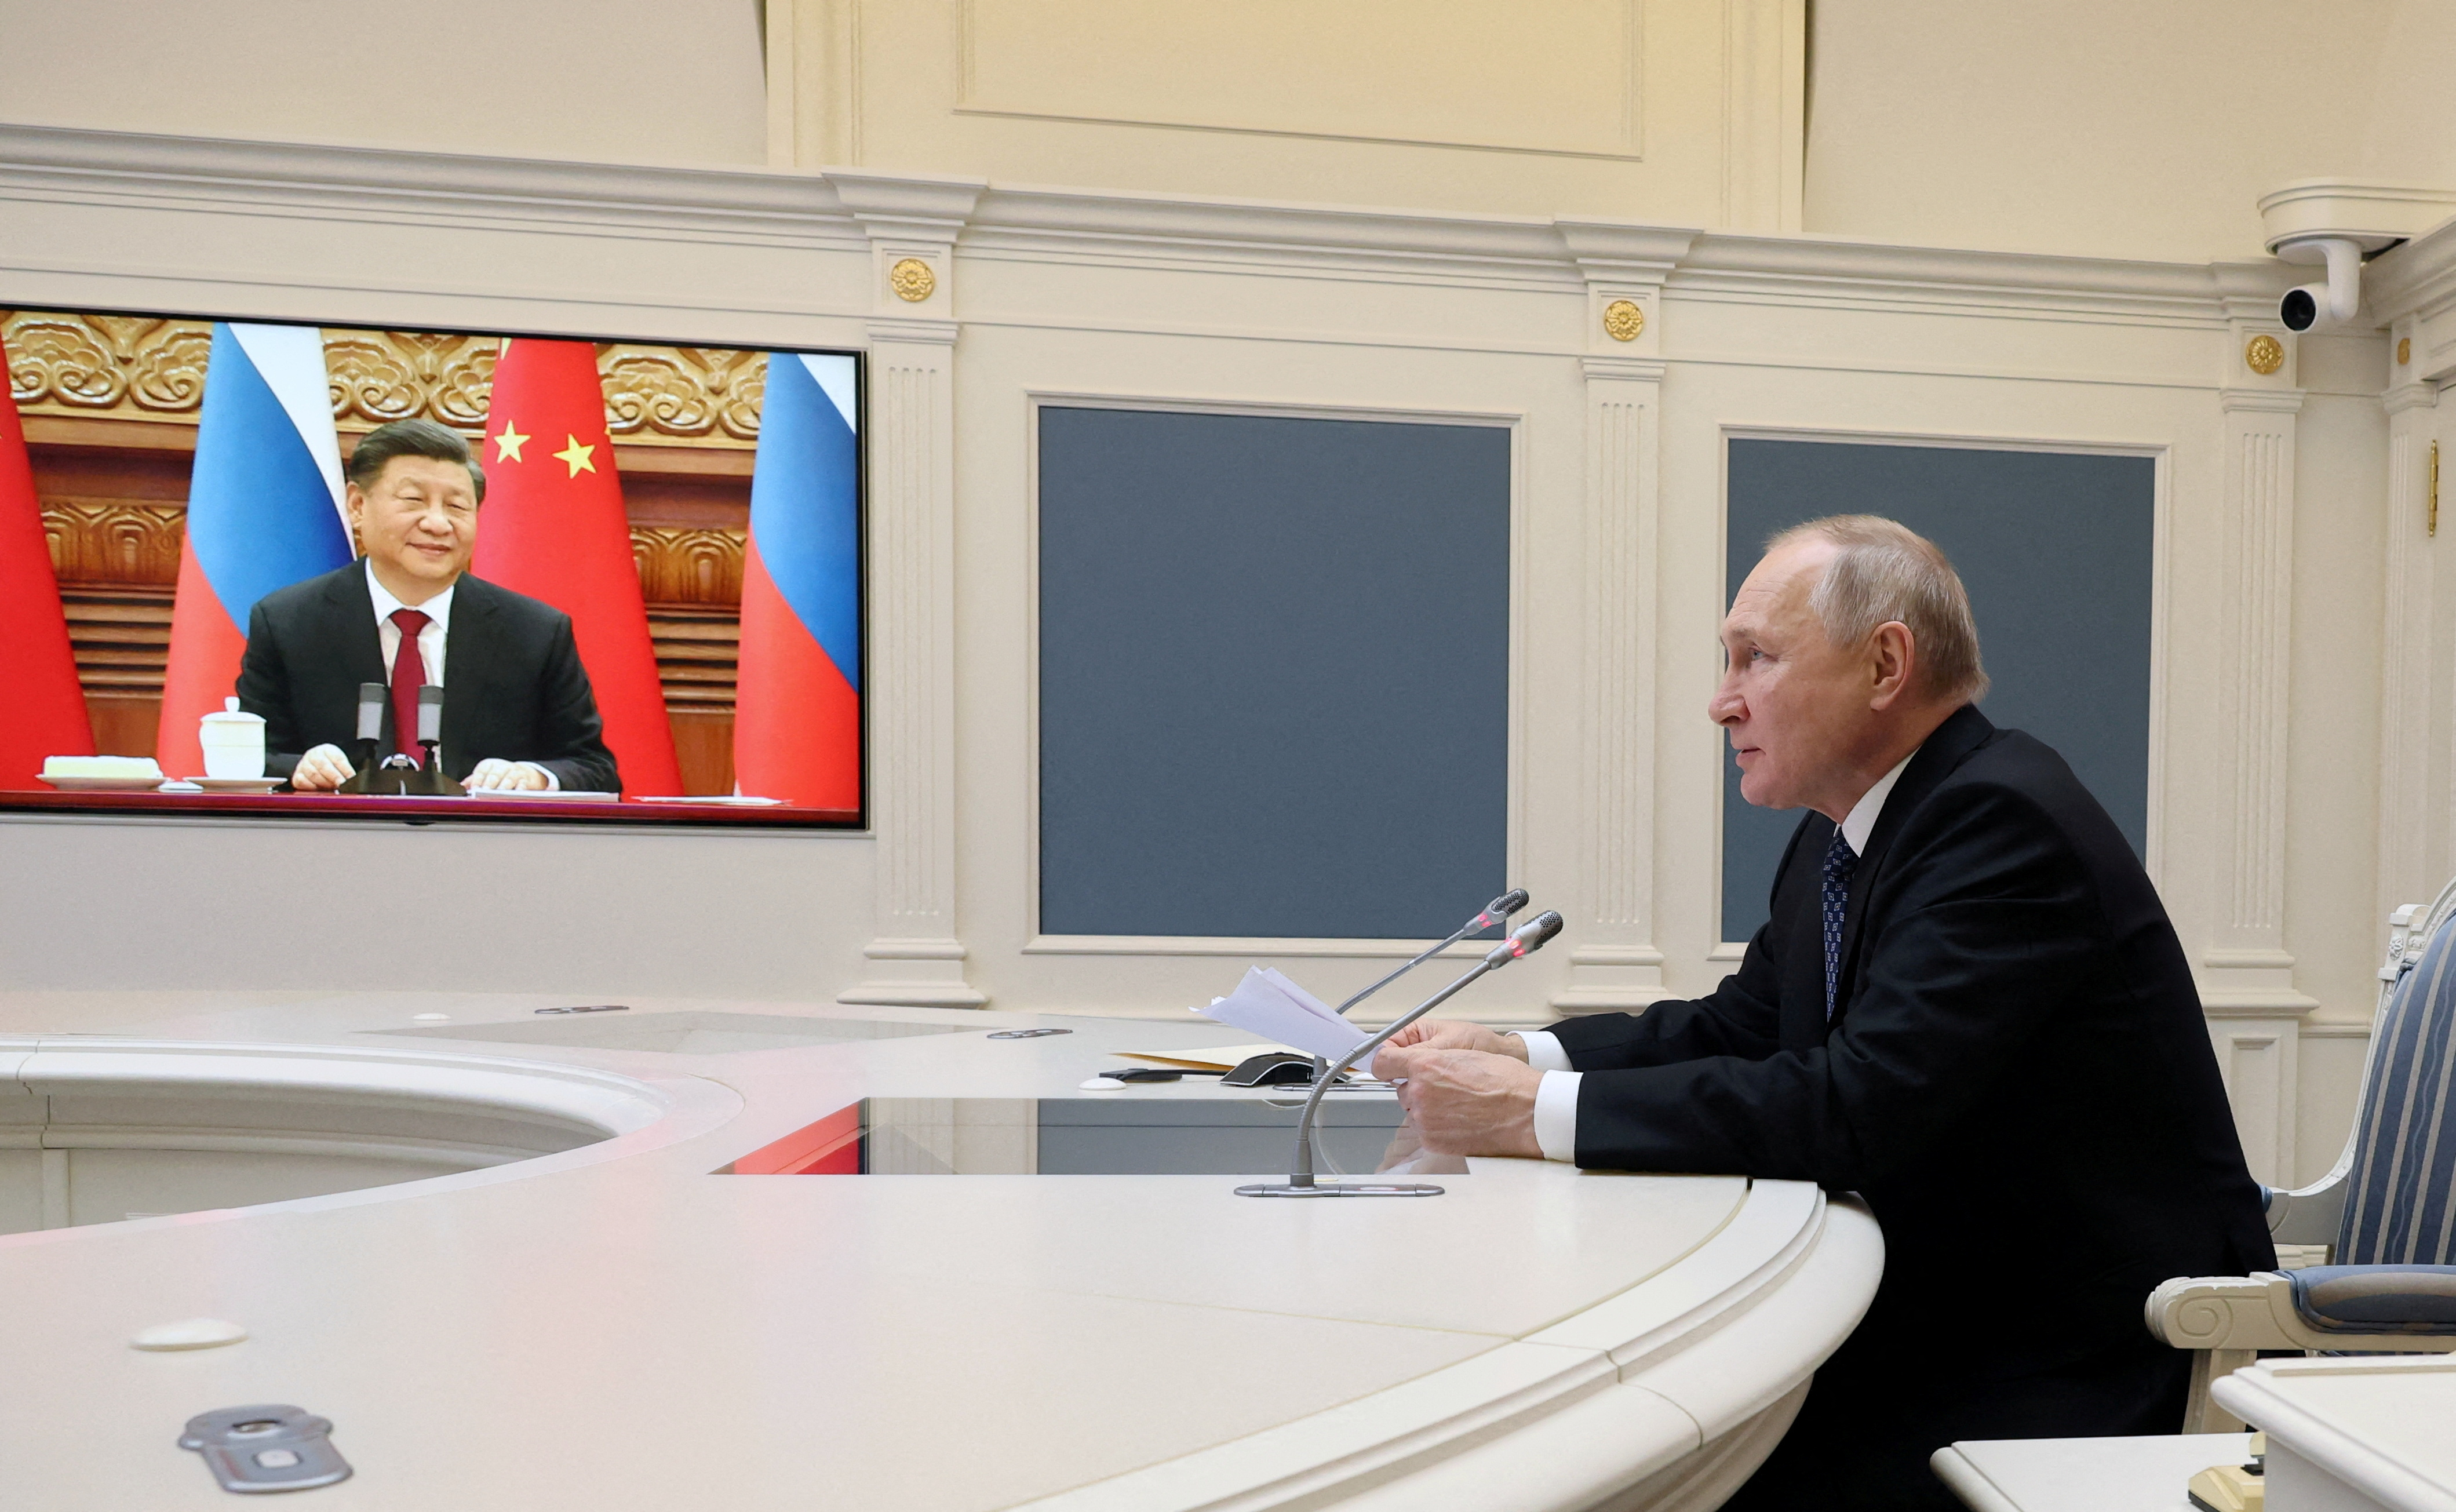 Putin and Xi hold talks via videolink